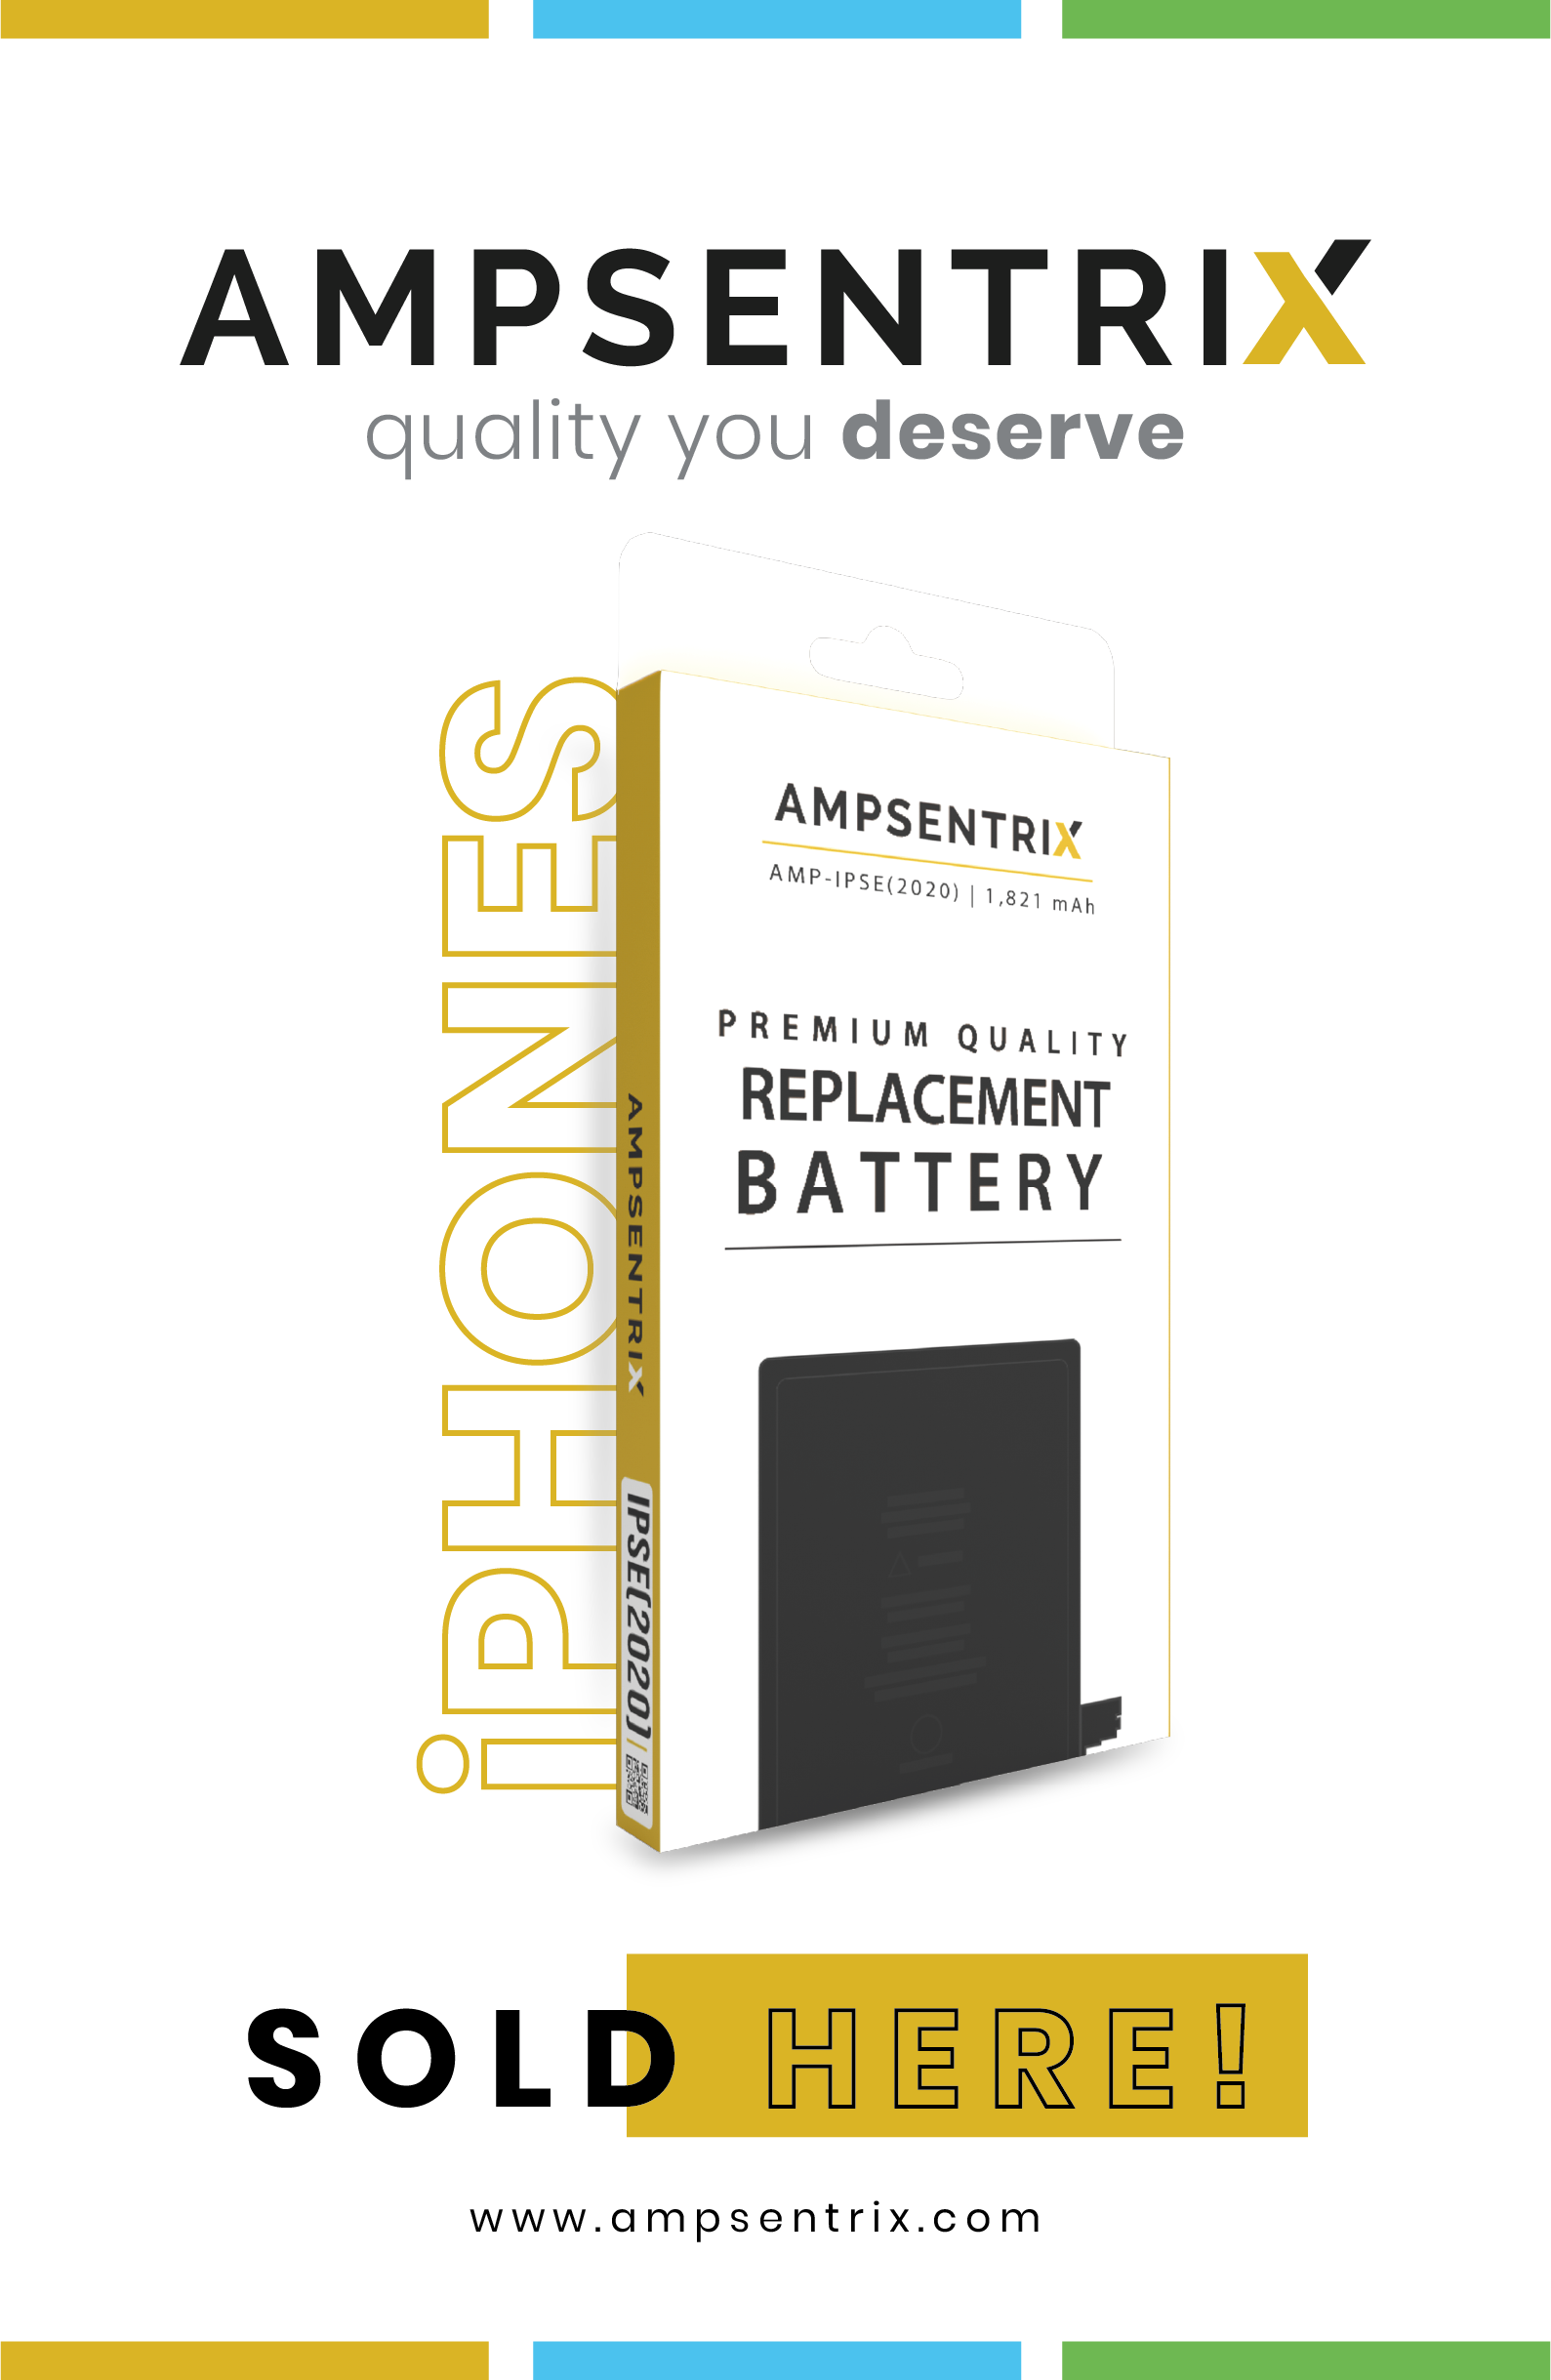 Baterías de repuesto Ampsentrix para Apple iPhone 6, 6 Plus, 6S, 6S Plus